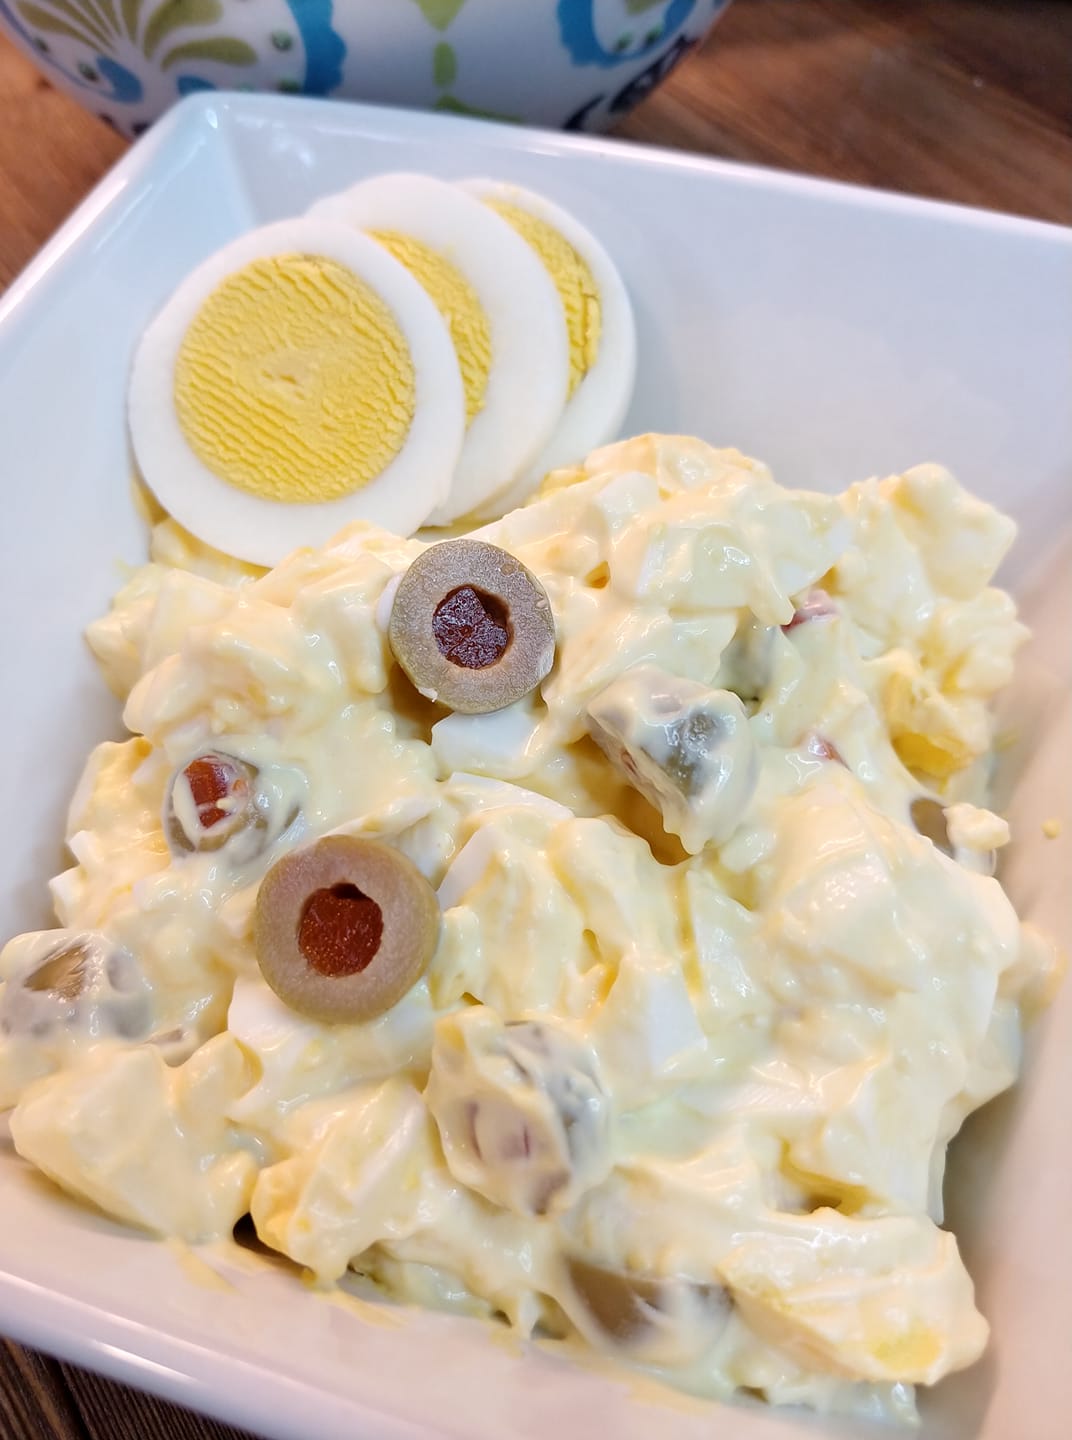 https://jettskitchen.com/wp-content/uploads/2021/01/easy-recipe-for-creamy-egg-salad.jpg